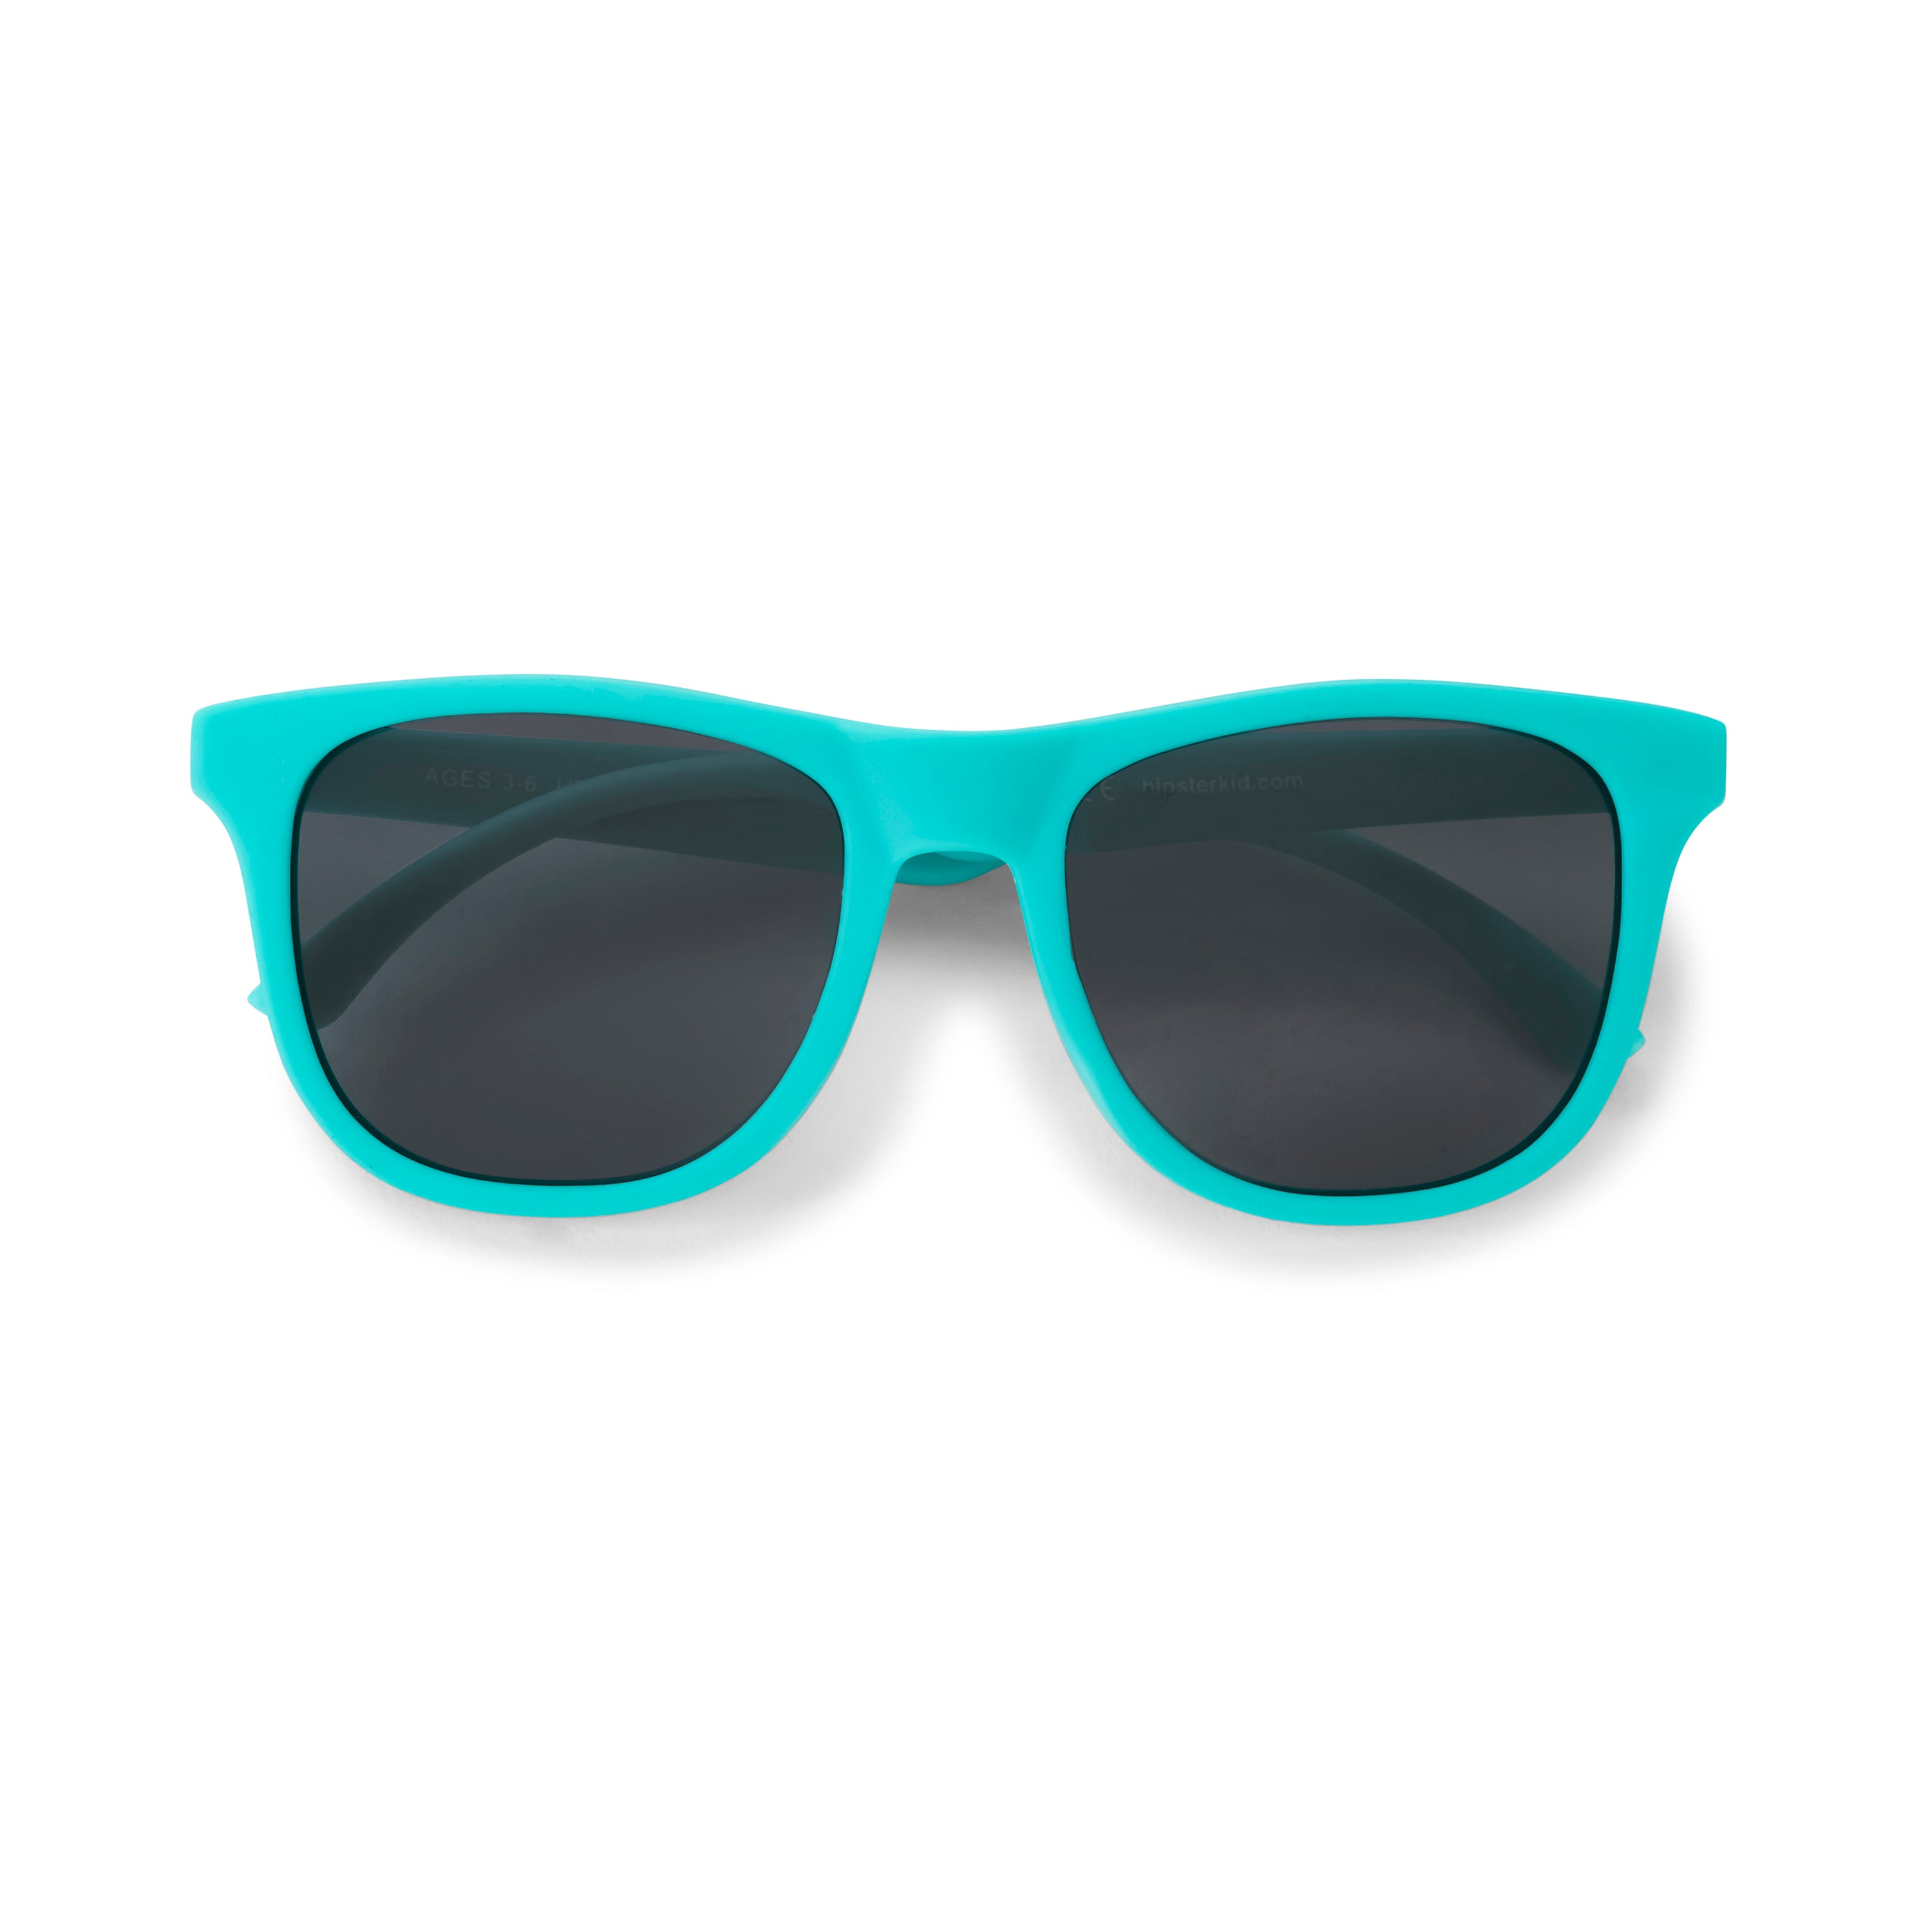 Polarized Baby Sunglasses - Black